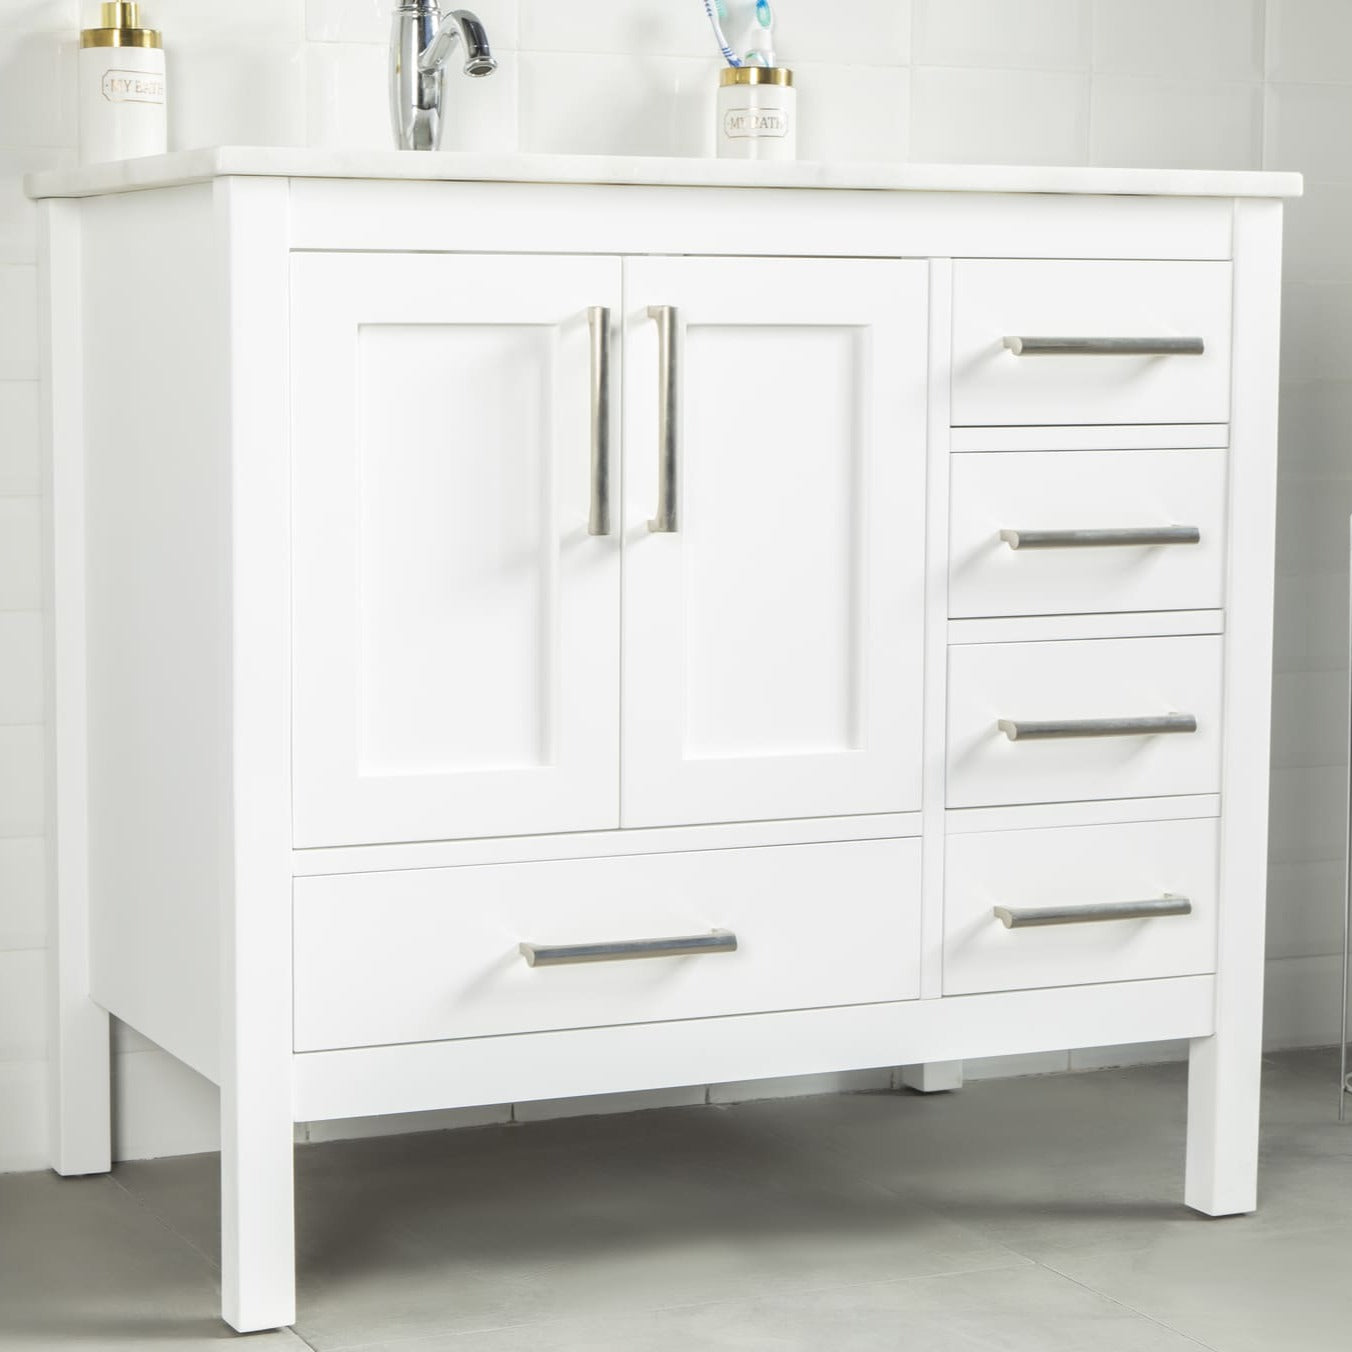 Ahley Bathroom Vanity Homelero 36"  #size_36"  #color_white  #hardware_brushed nickel